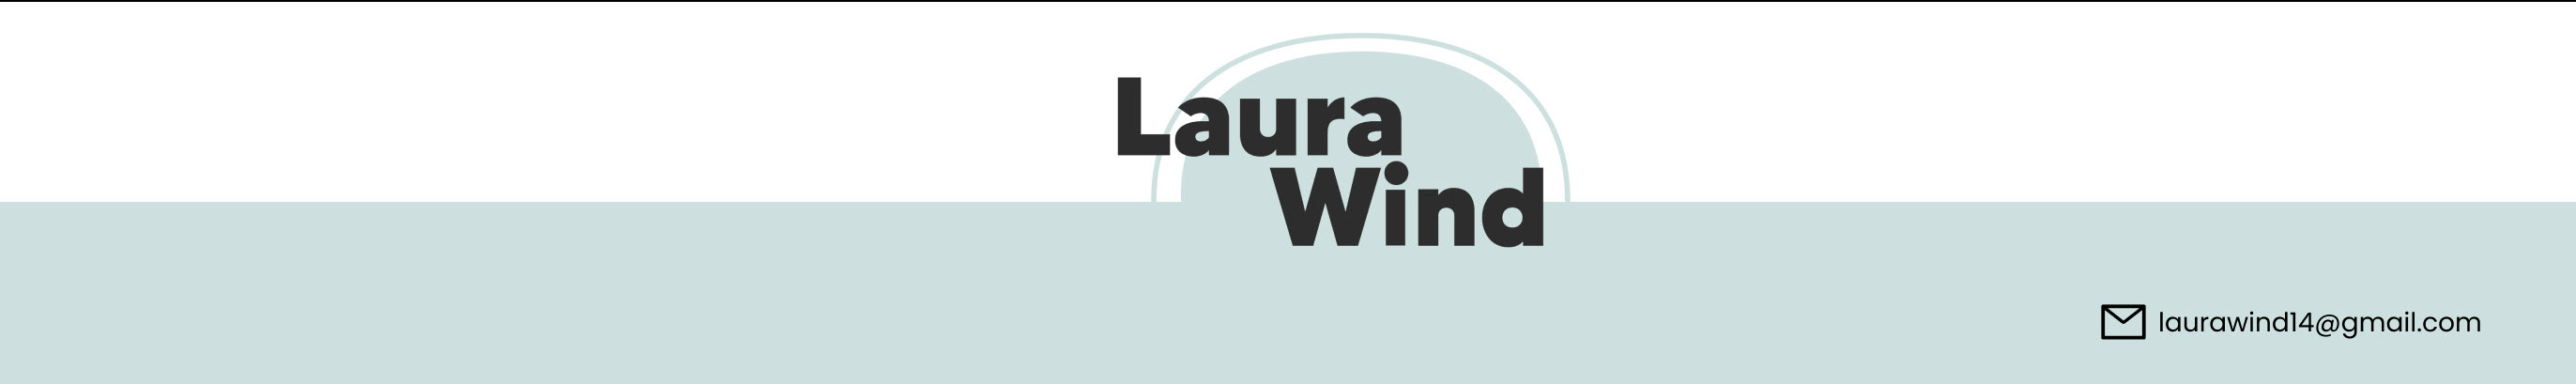 Laura Wind's profile banner